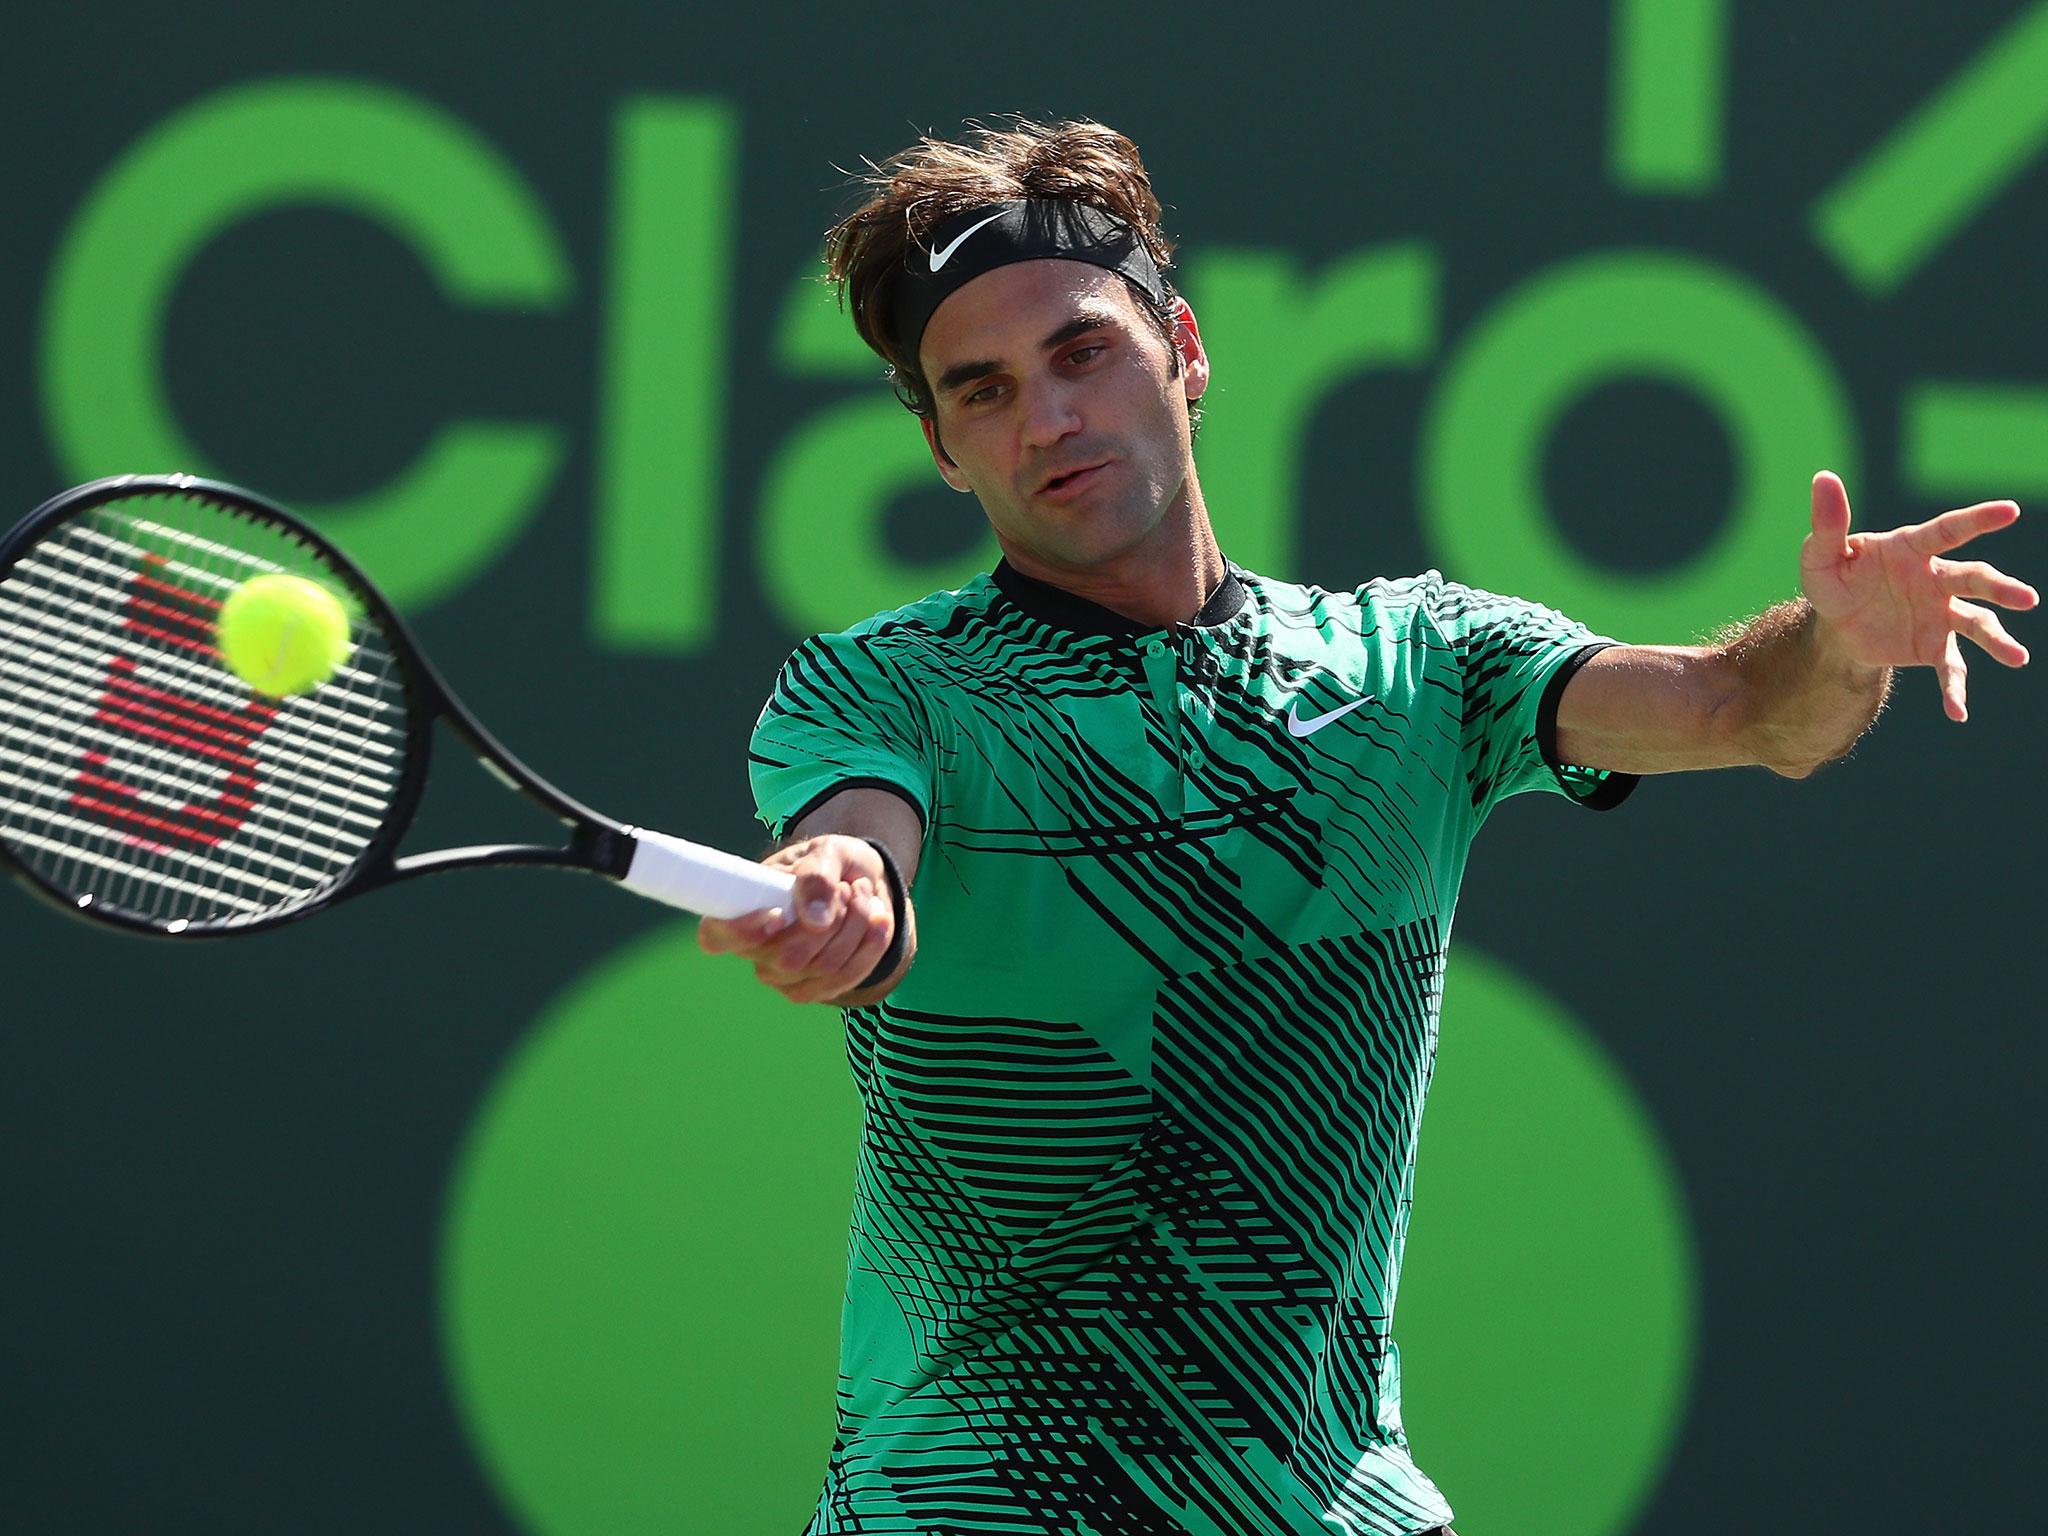 Roger Federer beat Juan Martin del Potro to reach the fourth round of the Miami Open